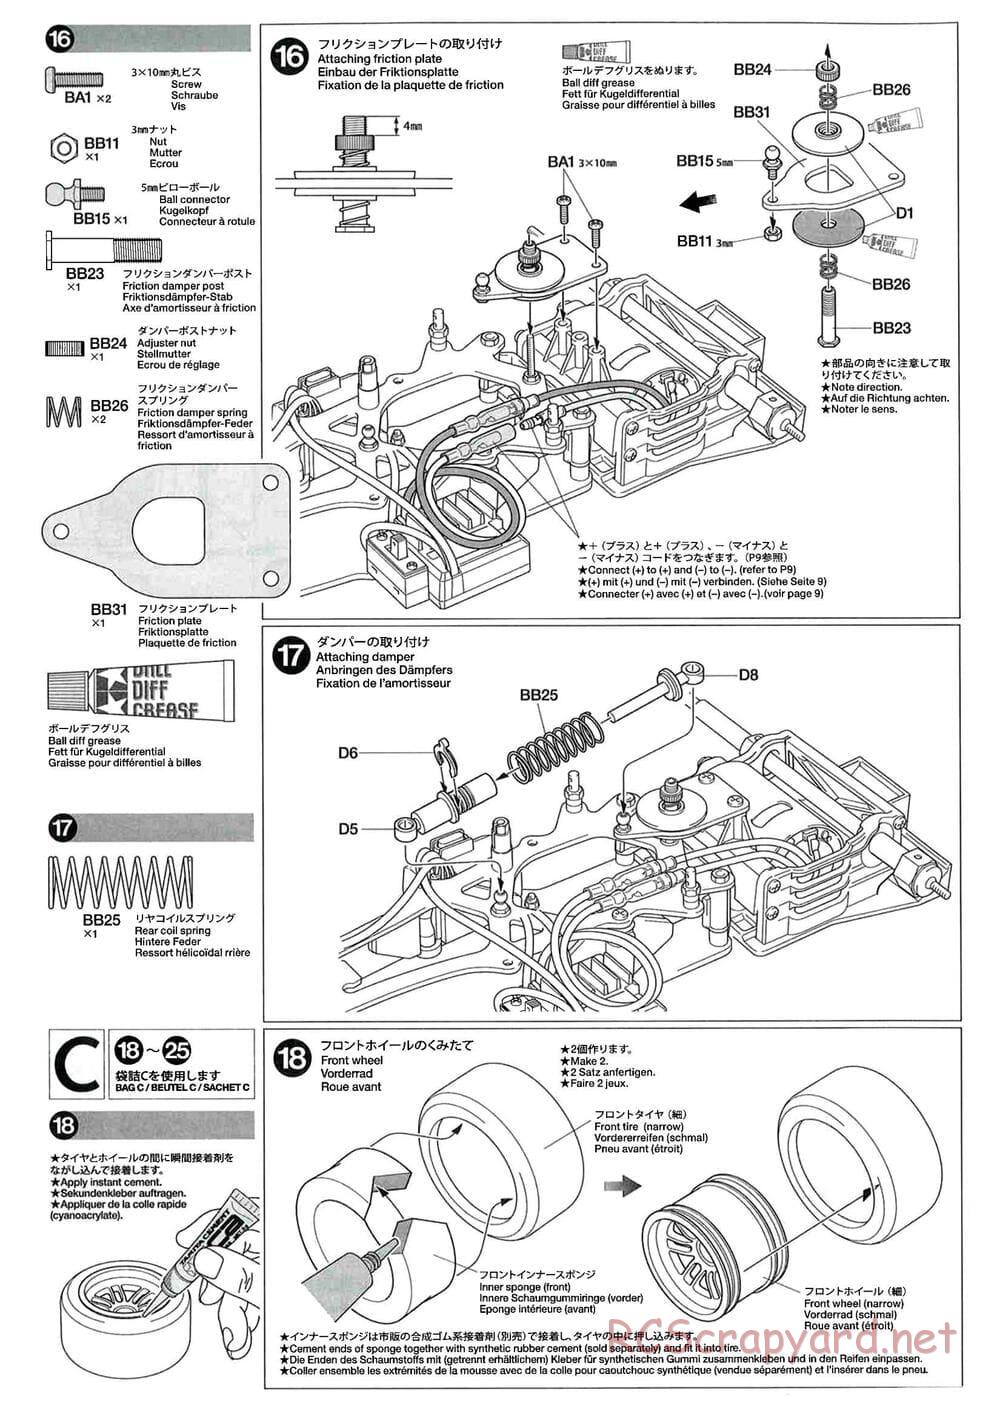 Tamiya - F104W Chassis - Manual - Page 10